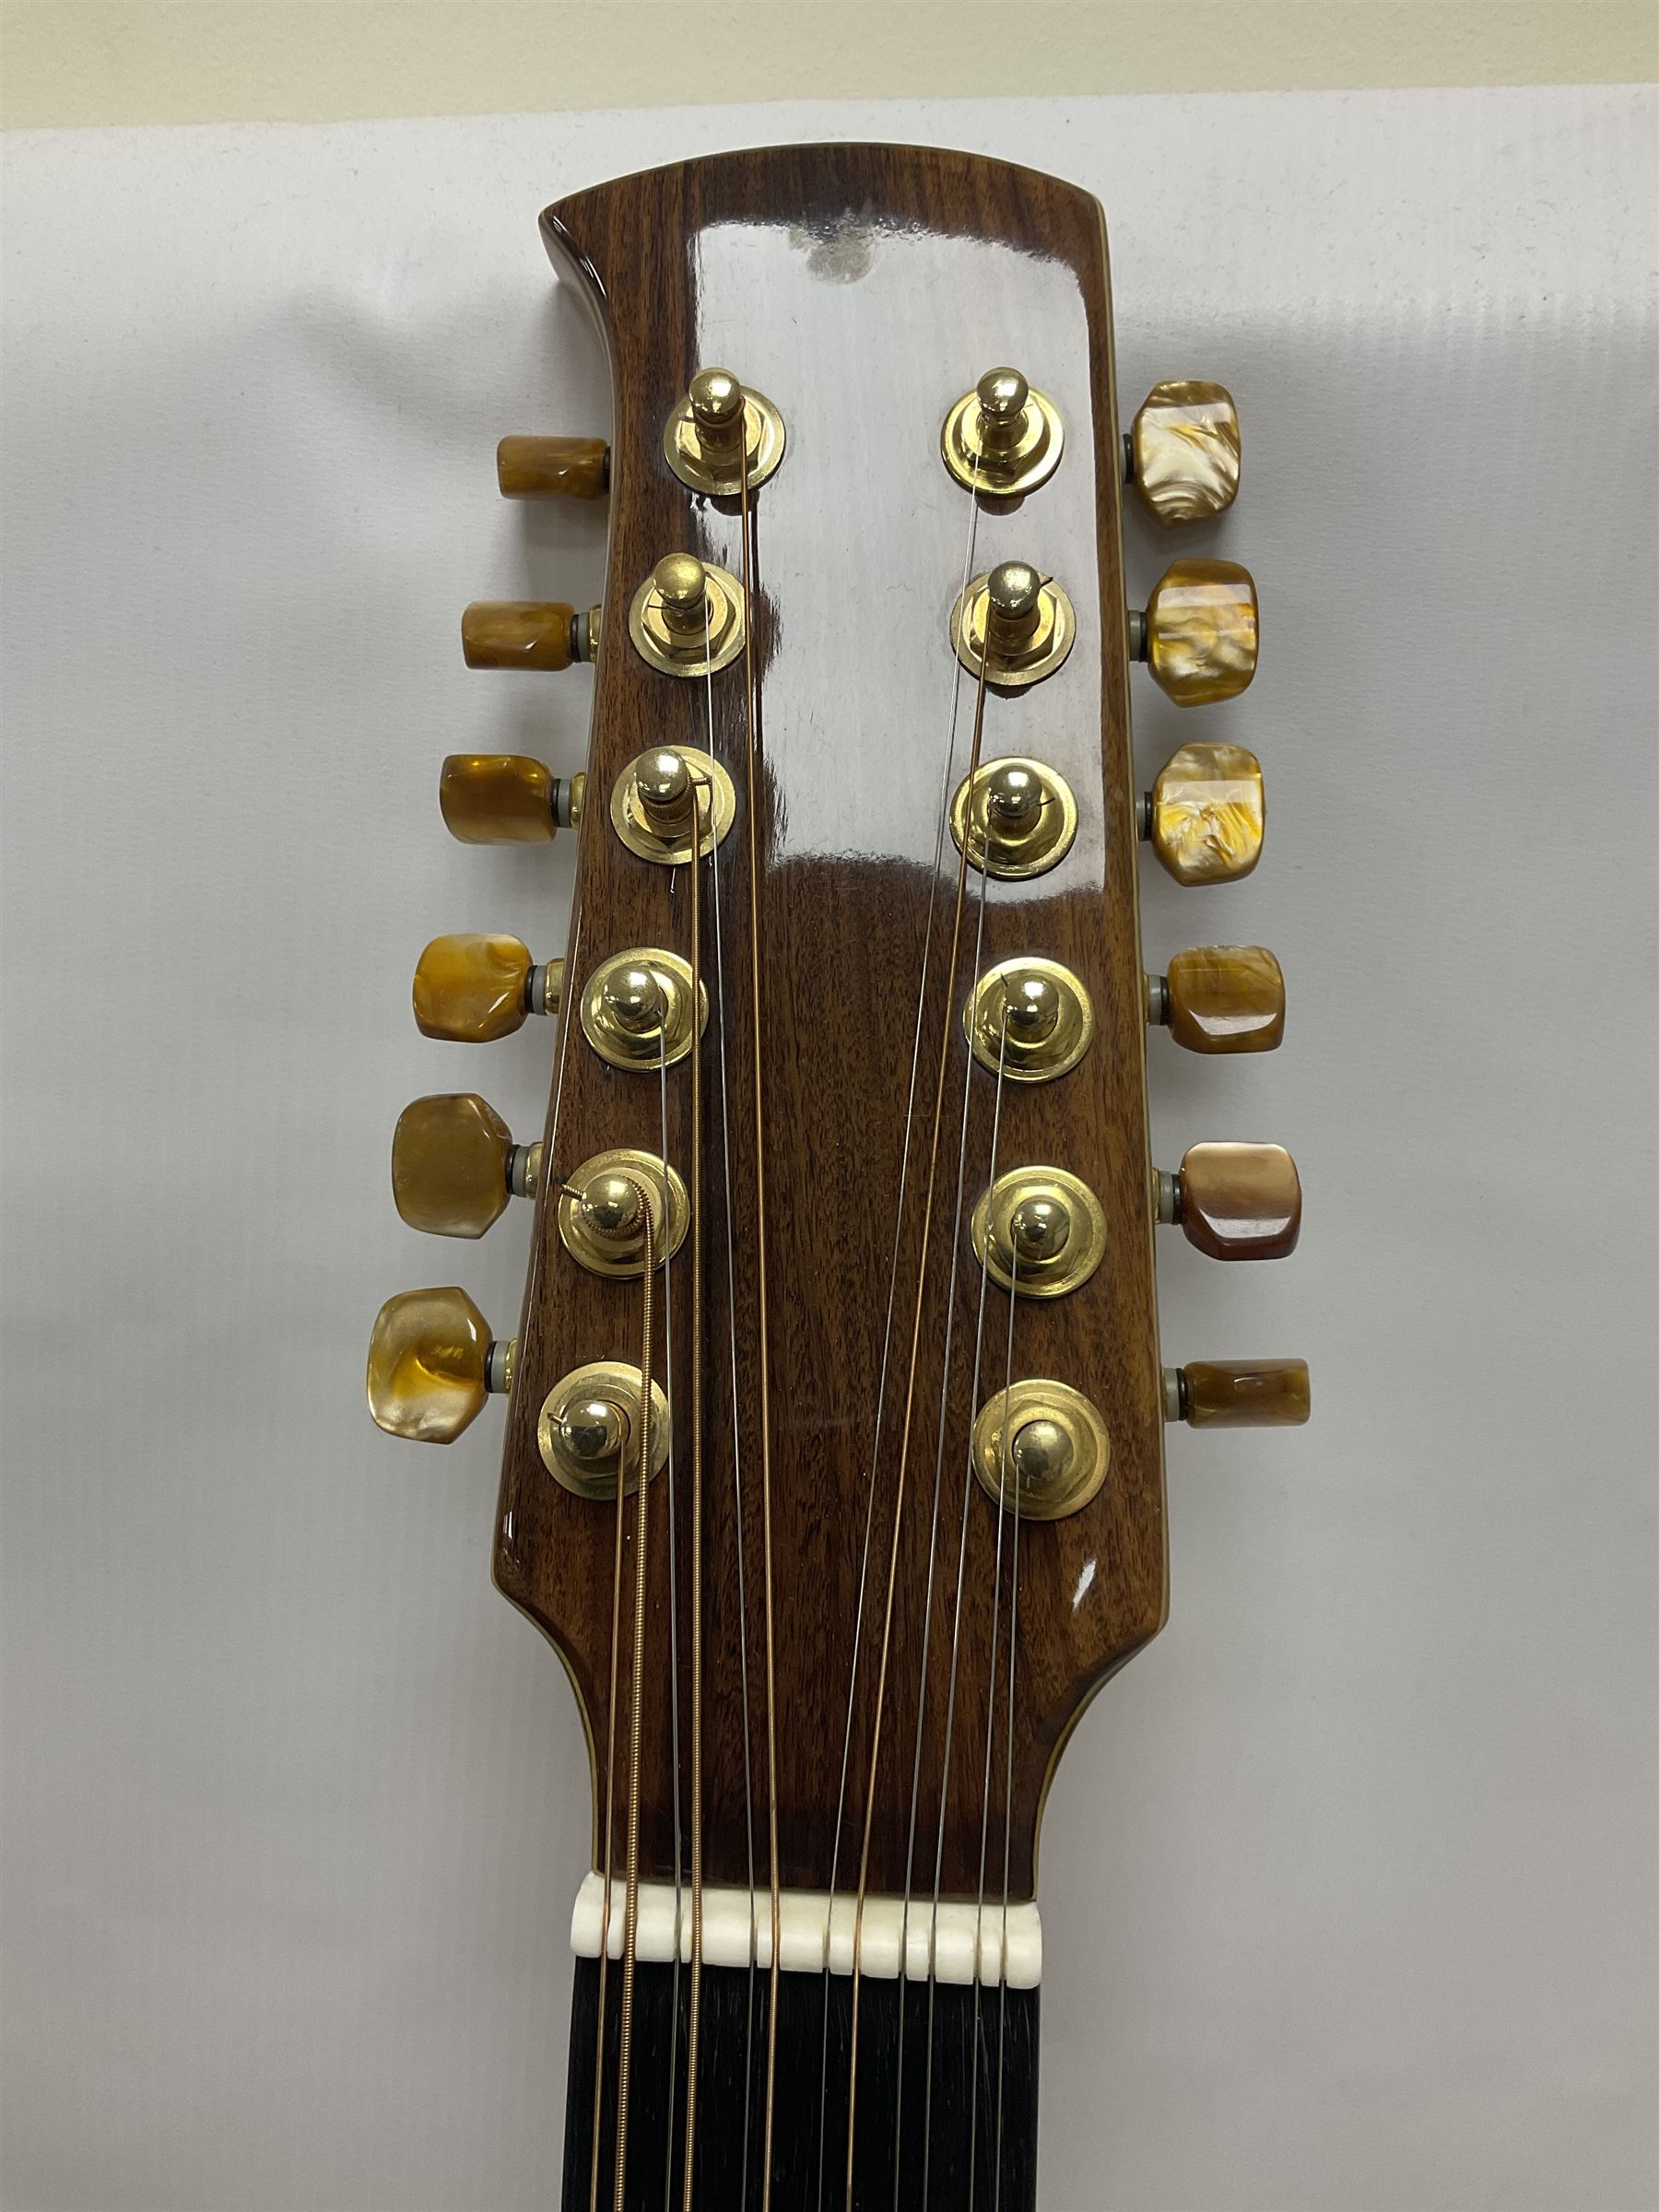 Brazilian Giannini Craviola twelve string acoustic guitar - Image 15 of 22